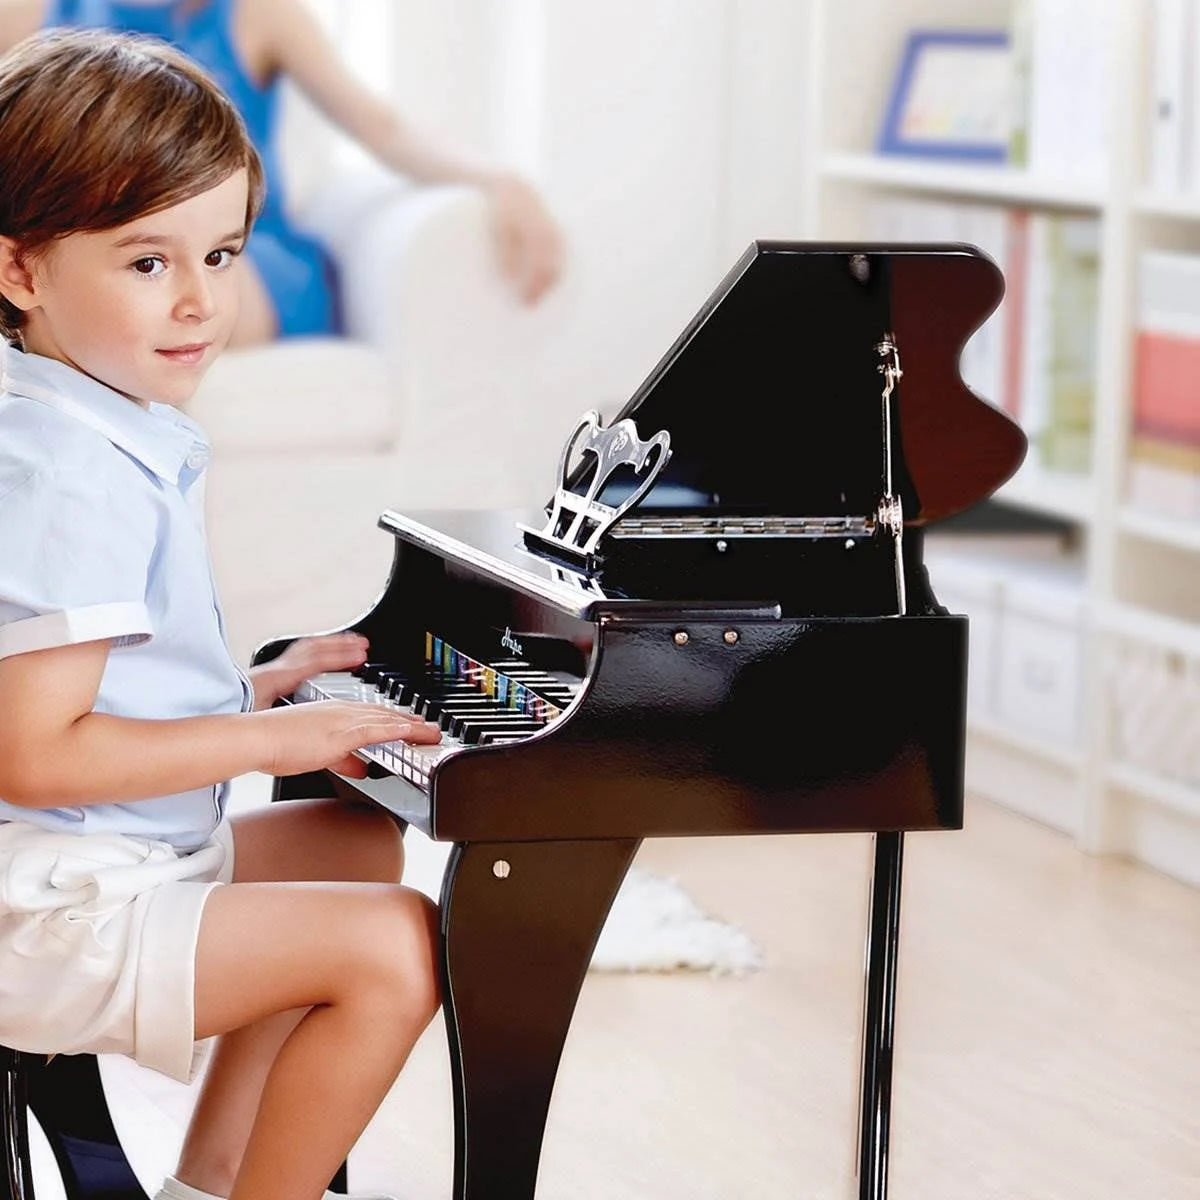 Hape Happy Grand Piano  Black – Modern Natural Baby